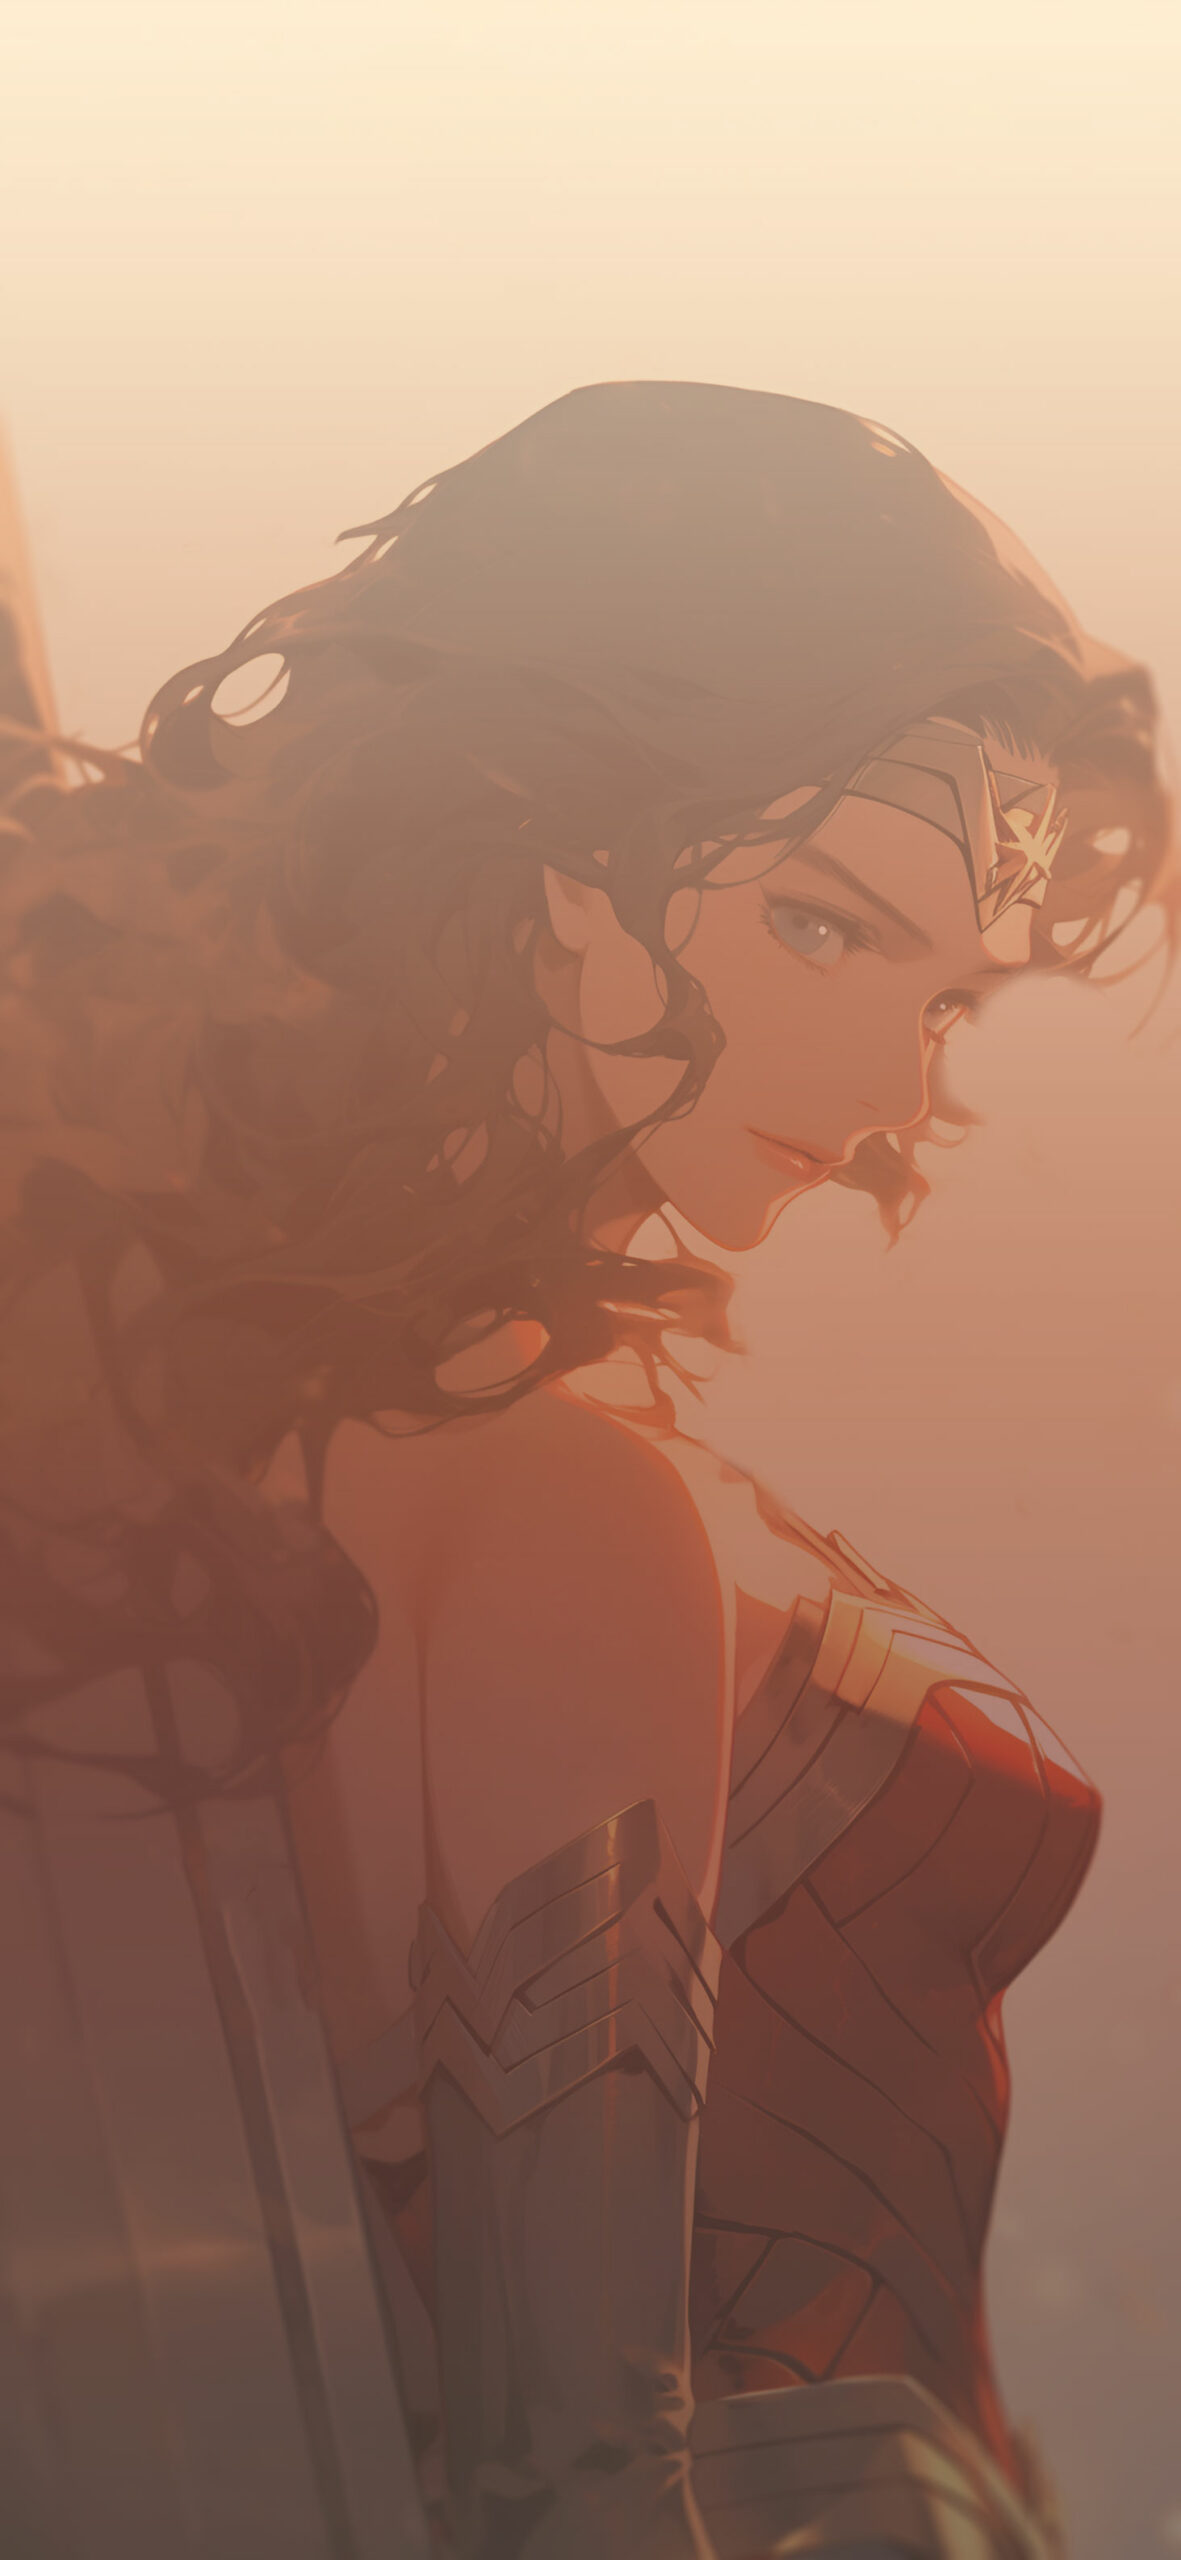 Wonder woman the marvelous heroine wallpaper DC superhero ar